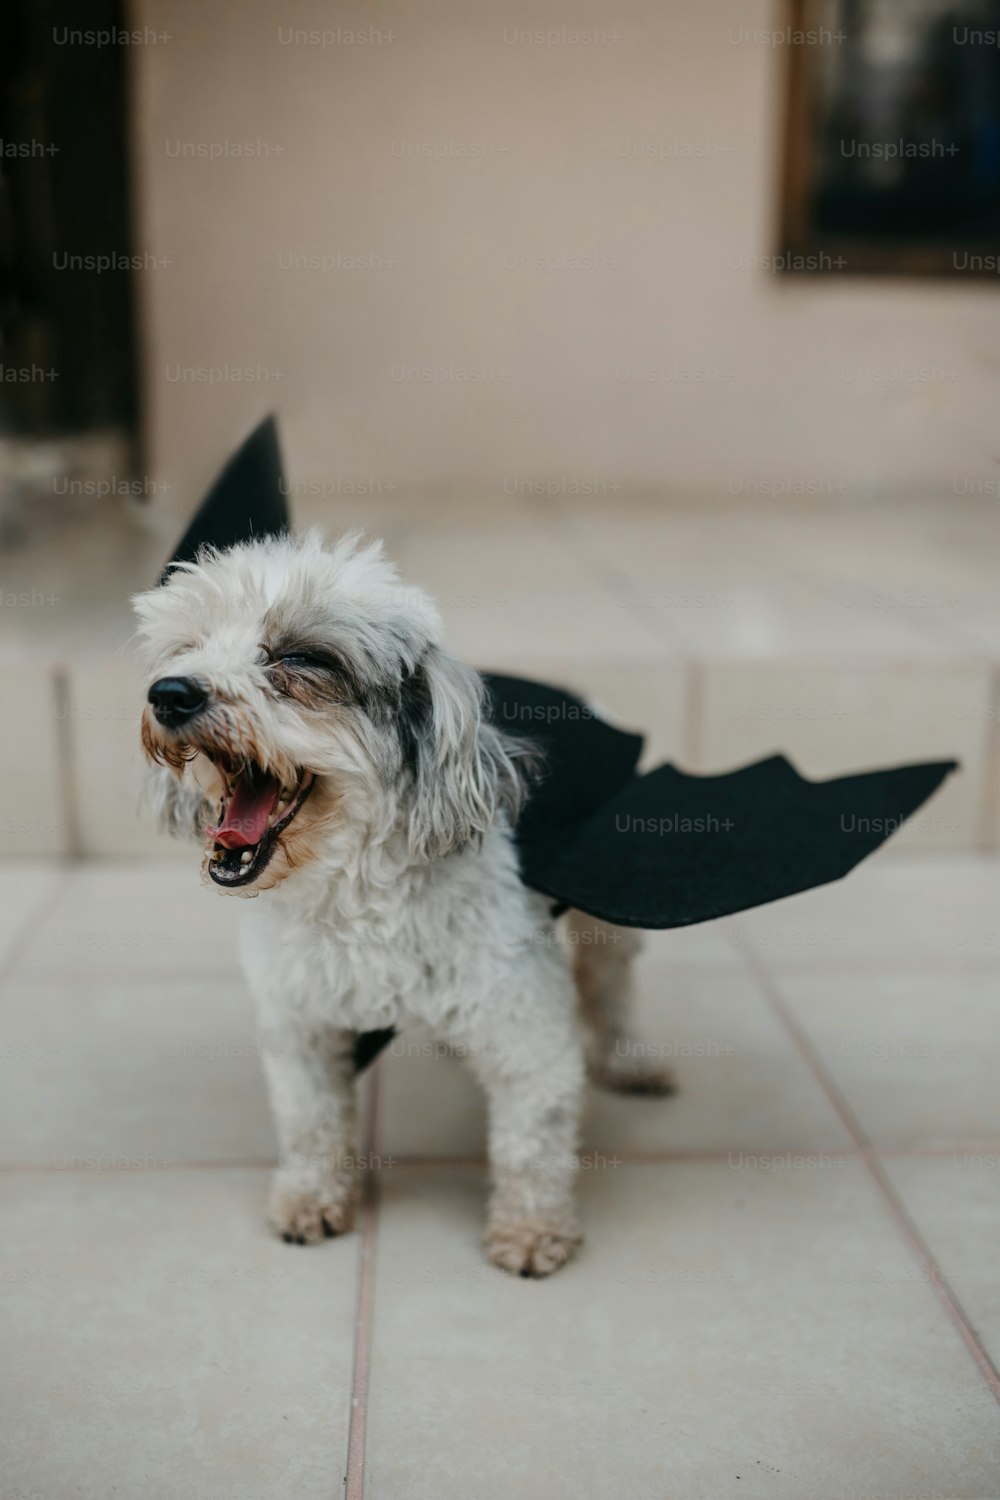 a small white dog wearing a black bat costume